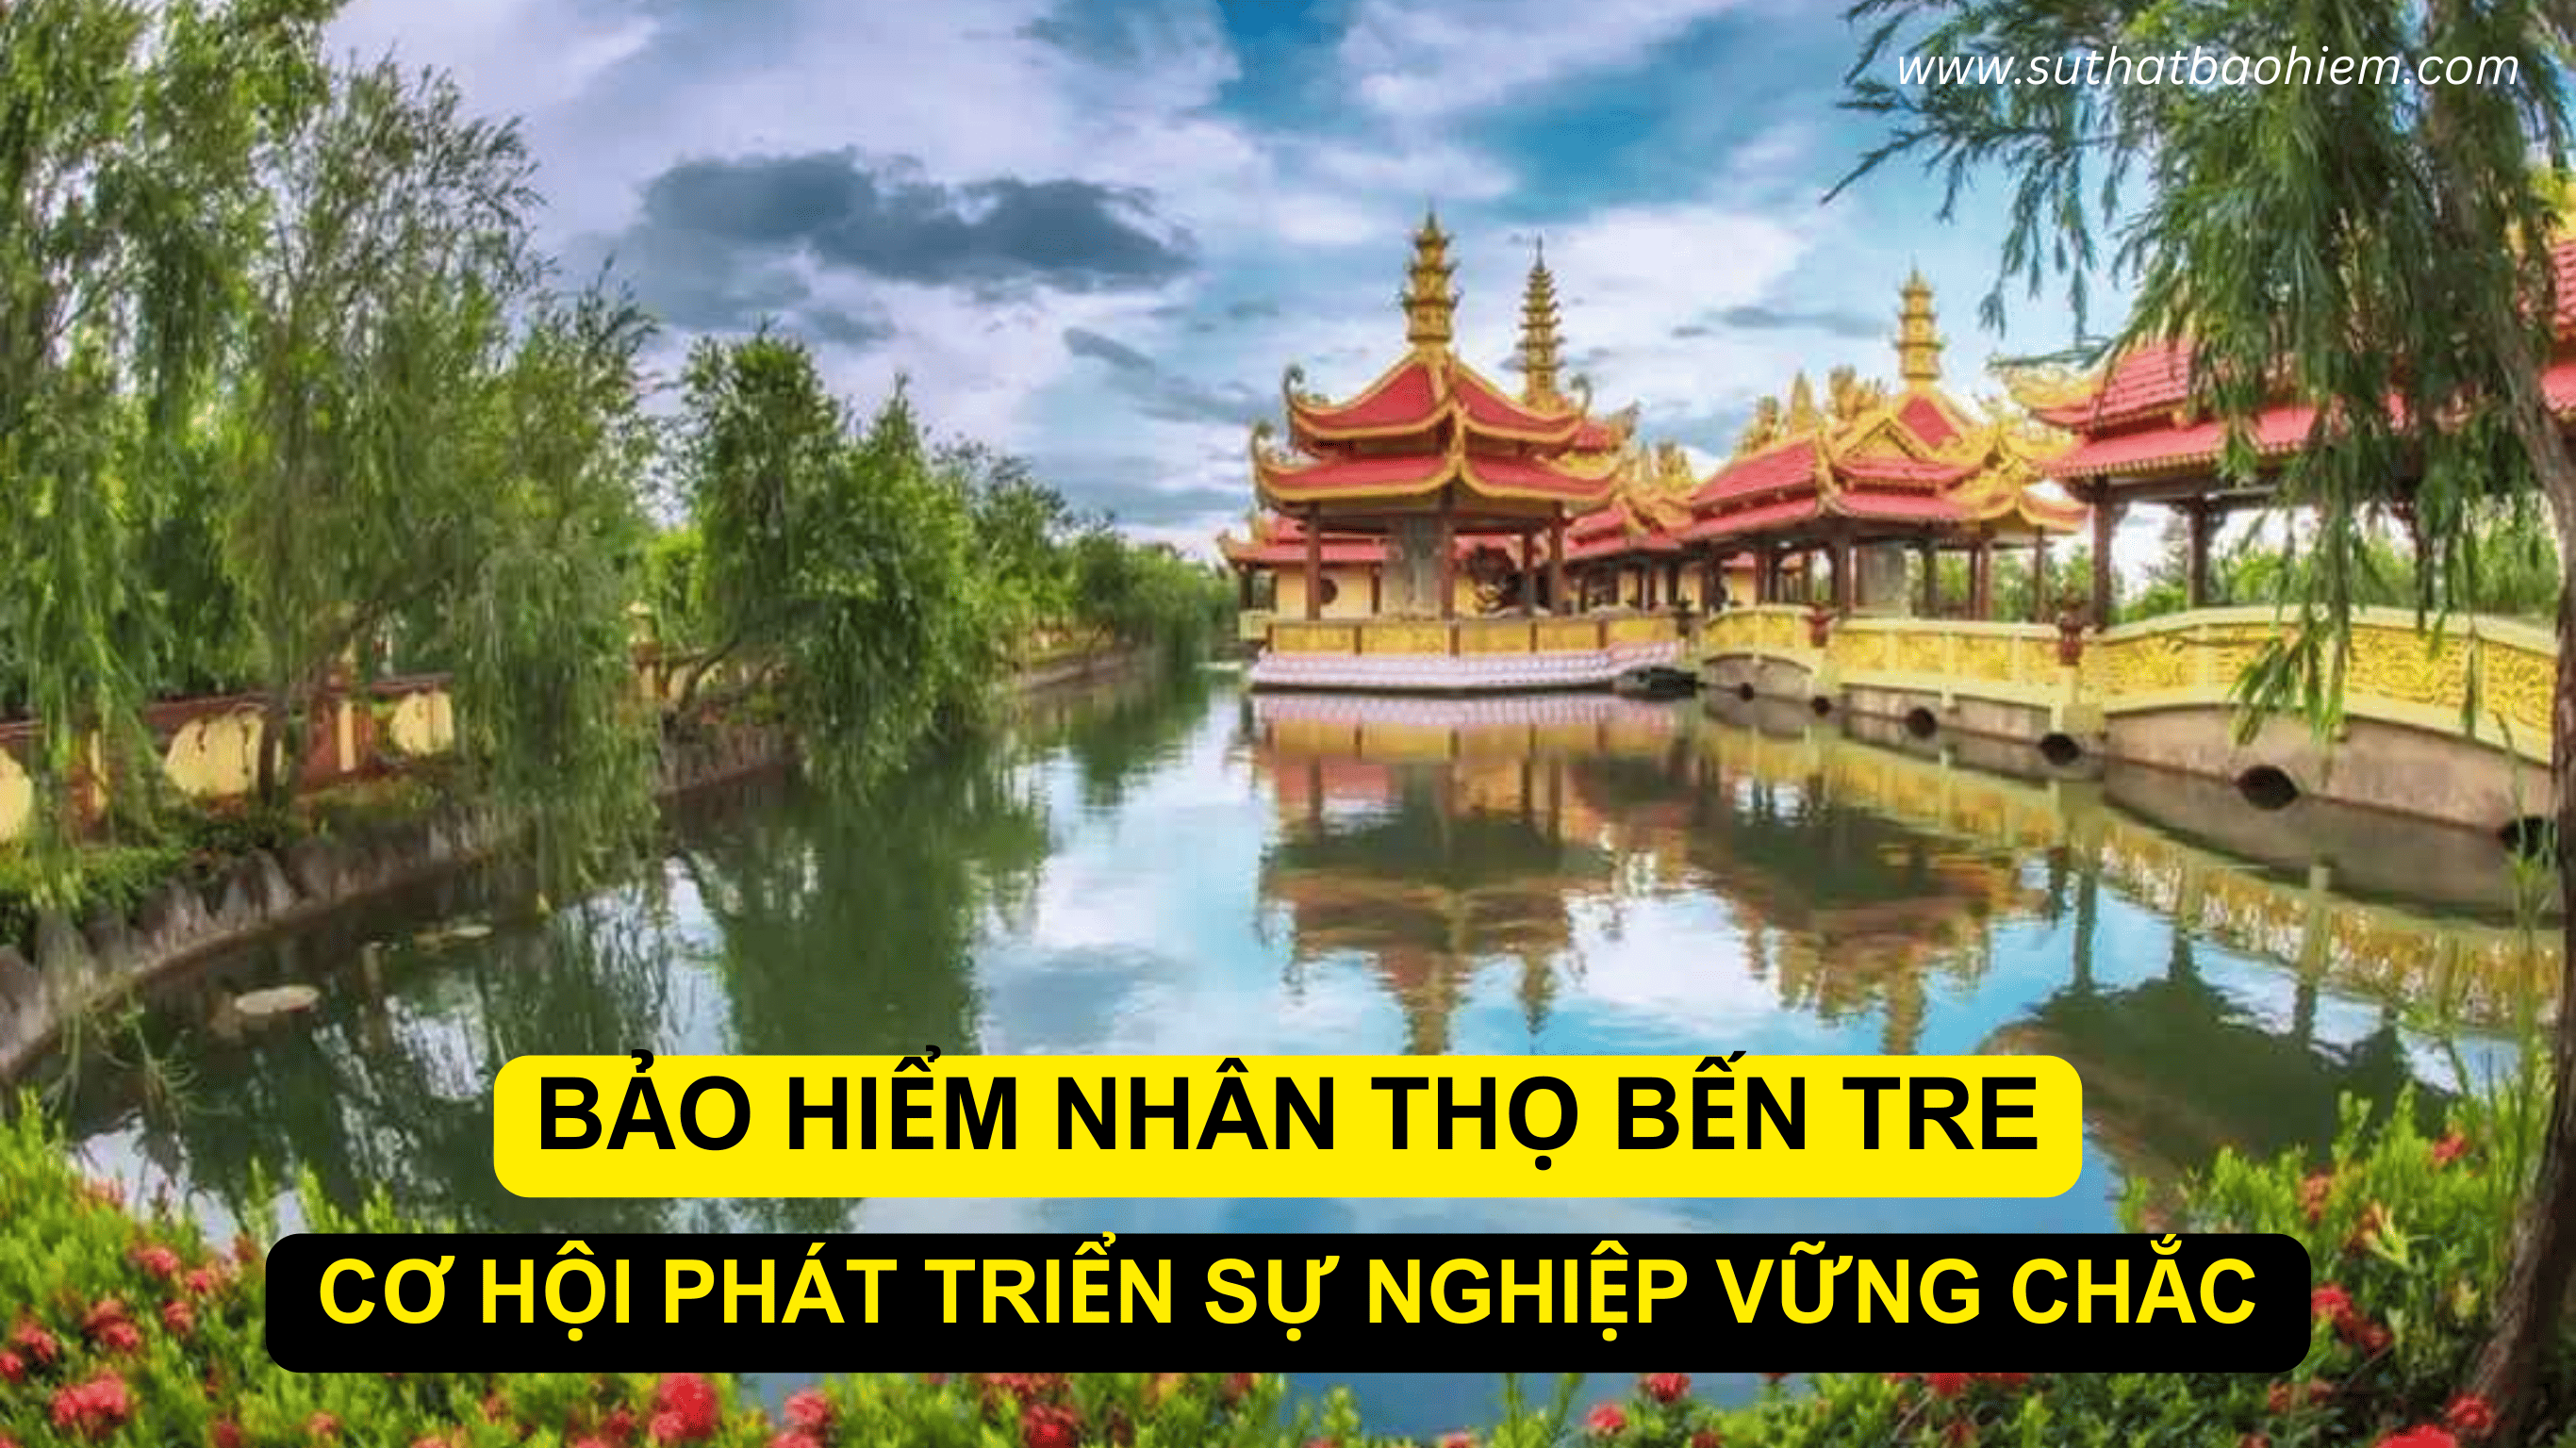 BAO HIEM NHAN THO HAI PHONG 17